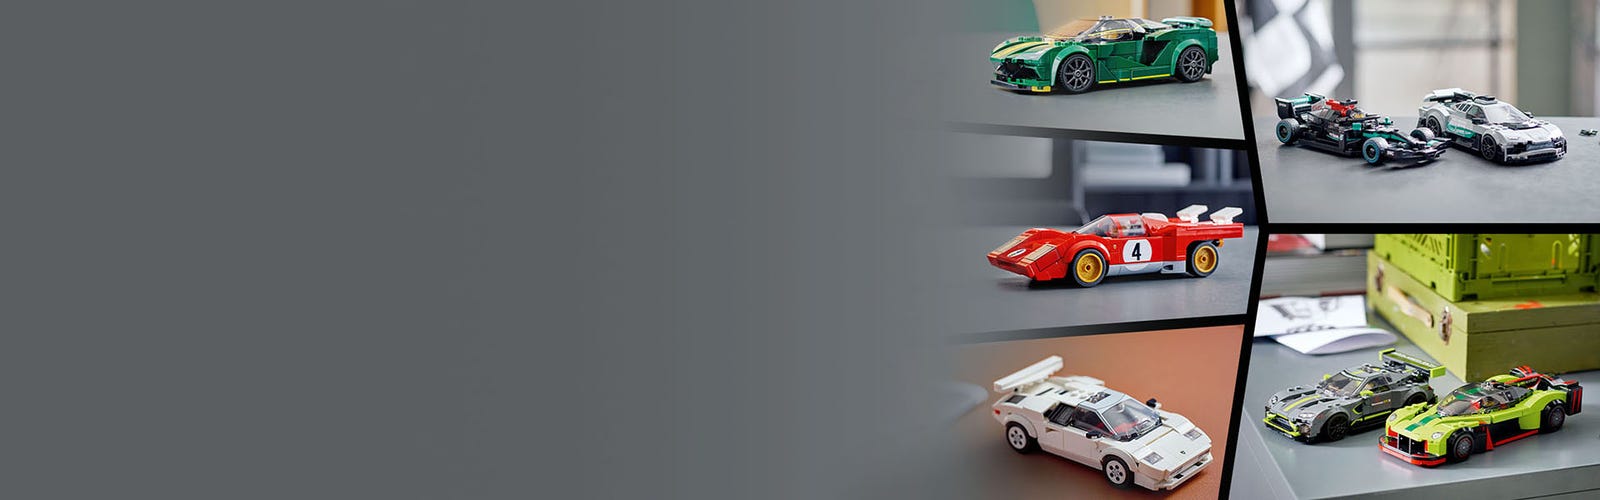 LEGO 76909 Mercedes-AMG F1 W12 e Performance et Mercedes-AMG Project O  Condition Nouveau.